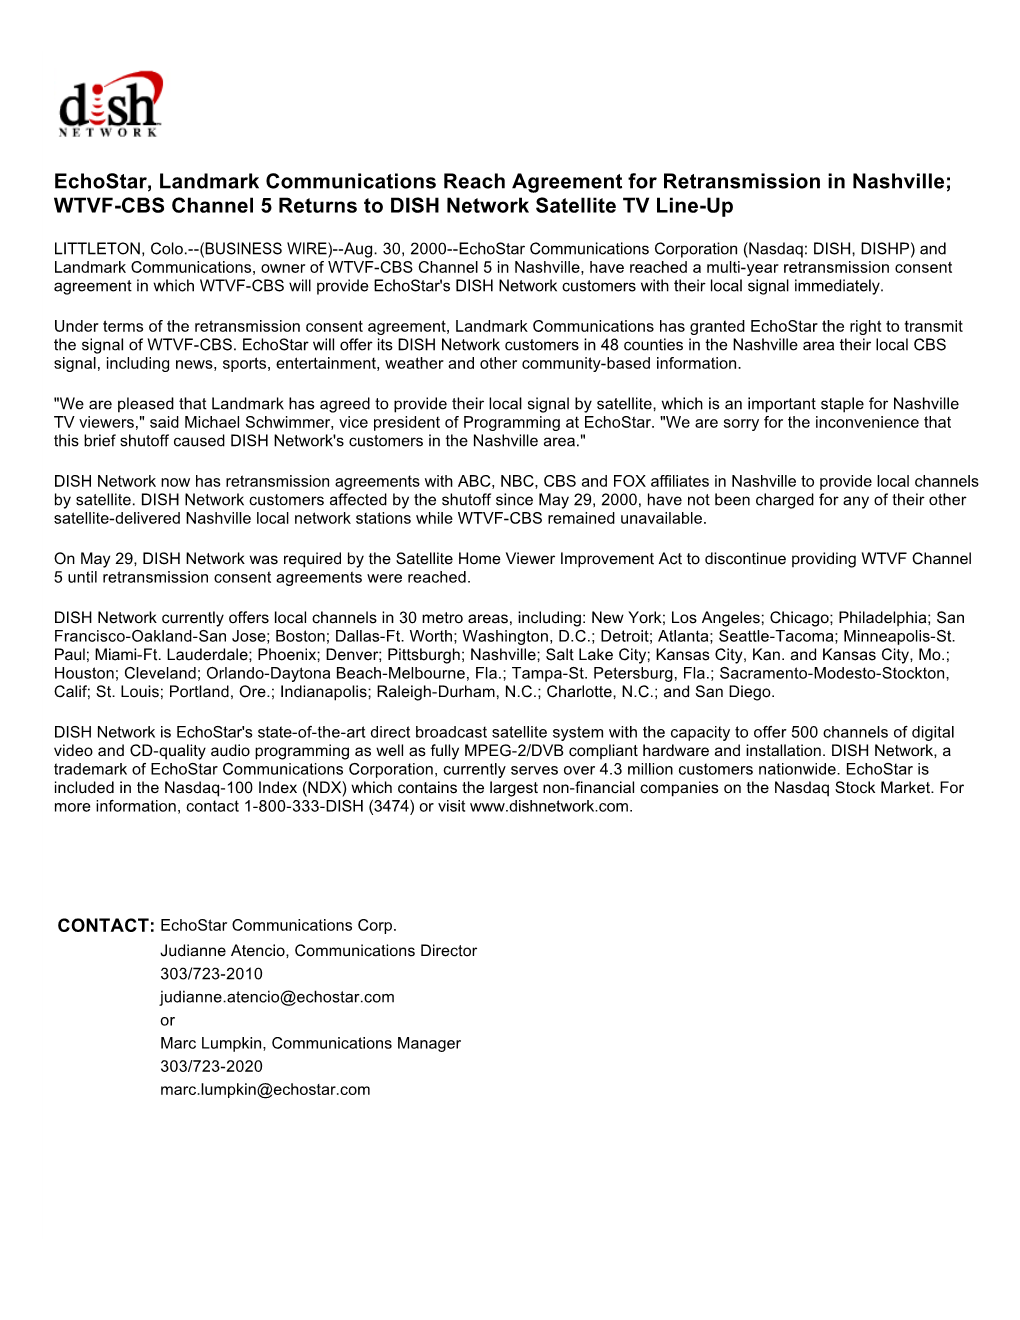 Echostar, Landmark Communications Reach Agreement for Retransmission in Nashville; WTVF-CBS Channel 5 Returns to DISH Network Satellite TV Line-Up